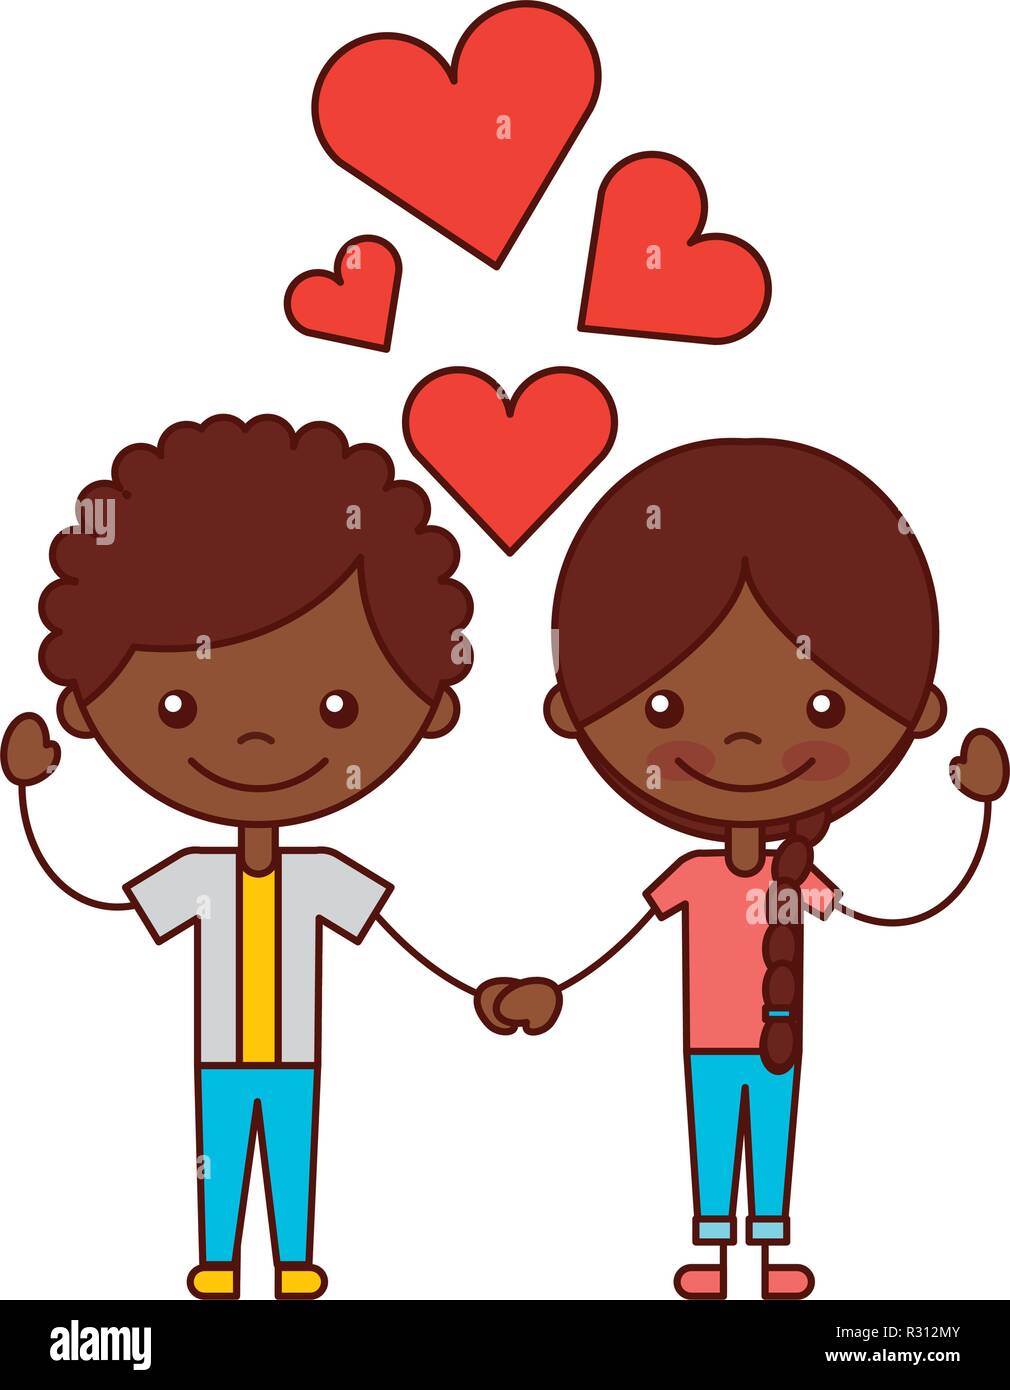 boy and girl love hearts cartoon vector illustration Stock Vector Image ...